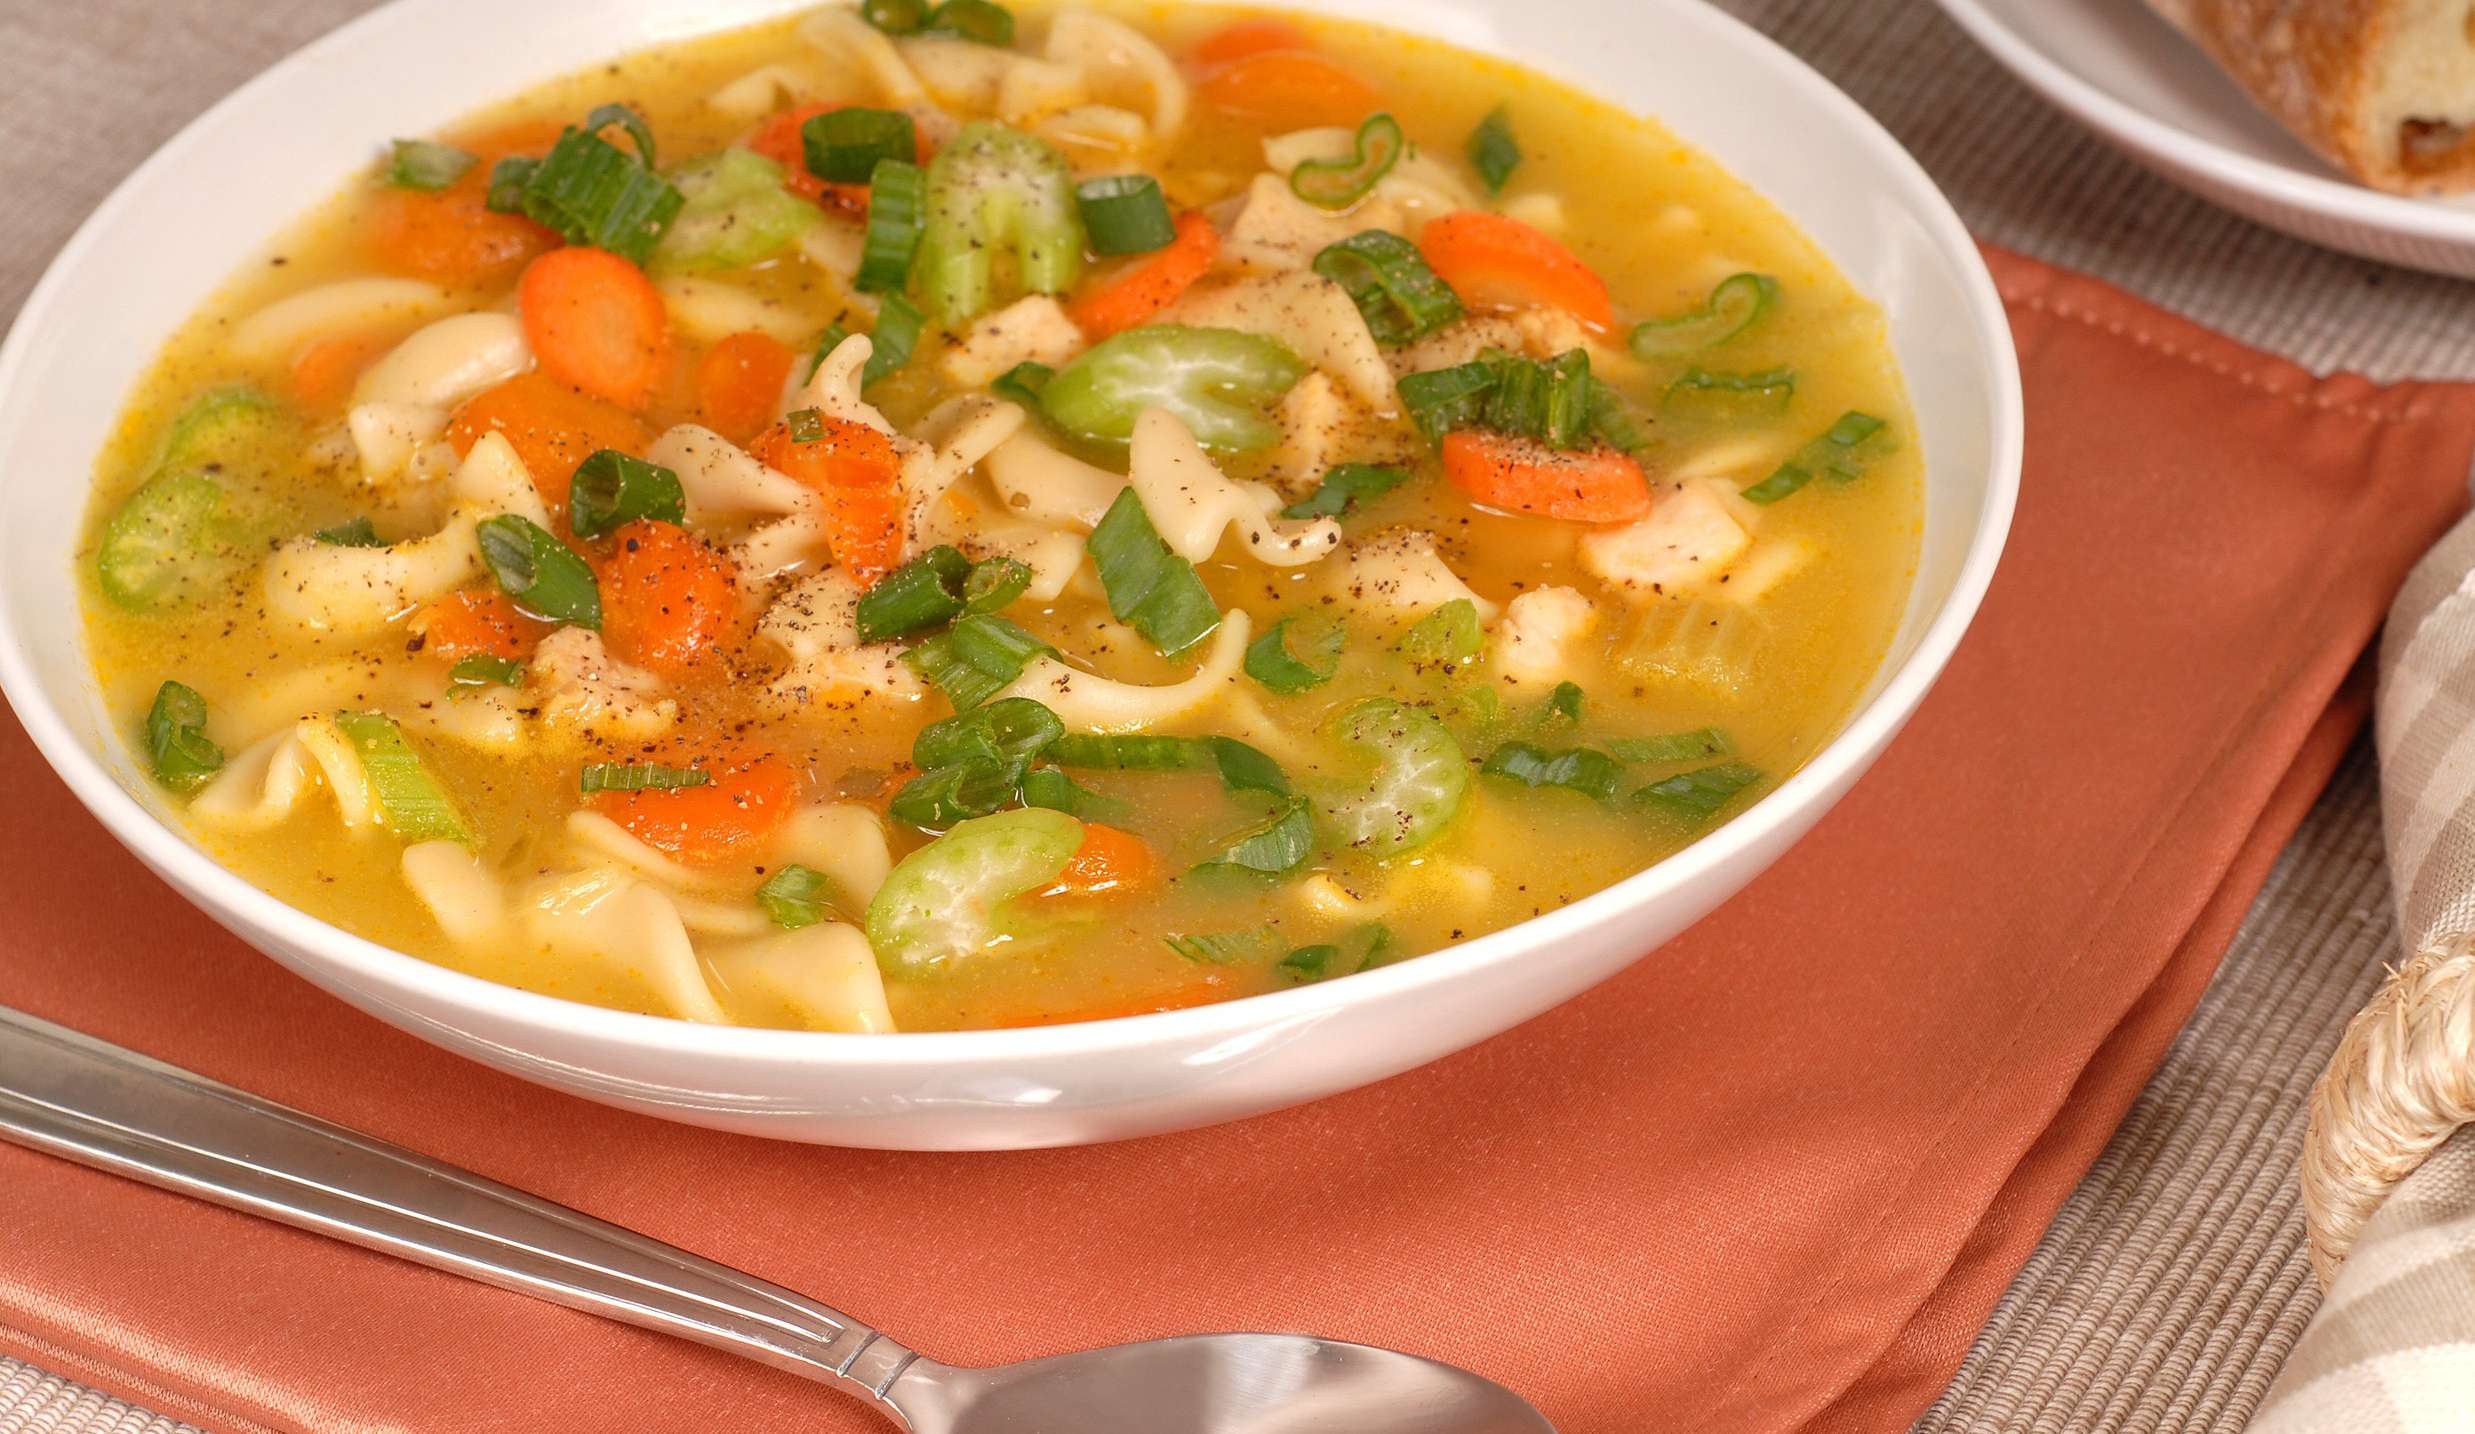 Vegetarian "Chicken" Noodle Soup